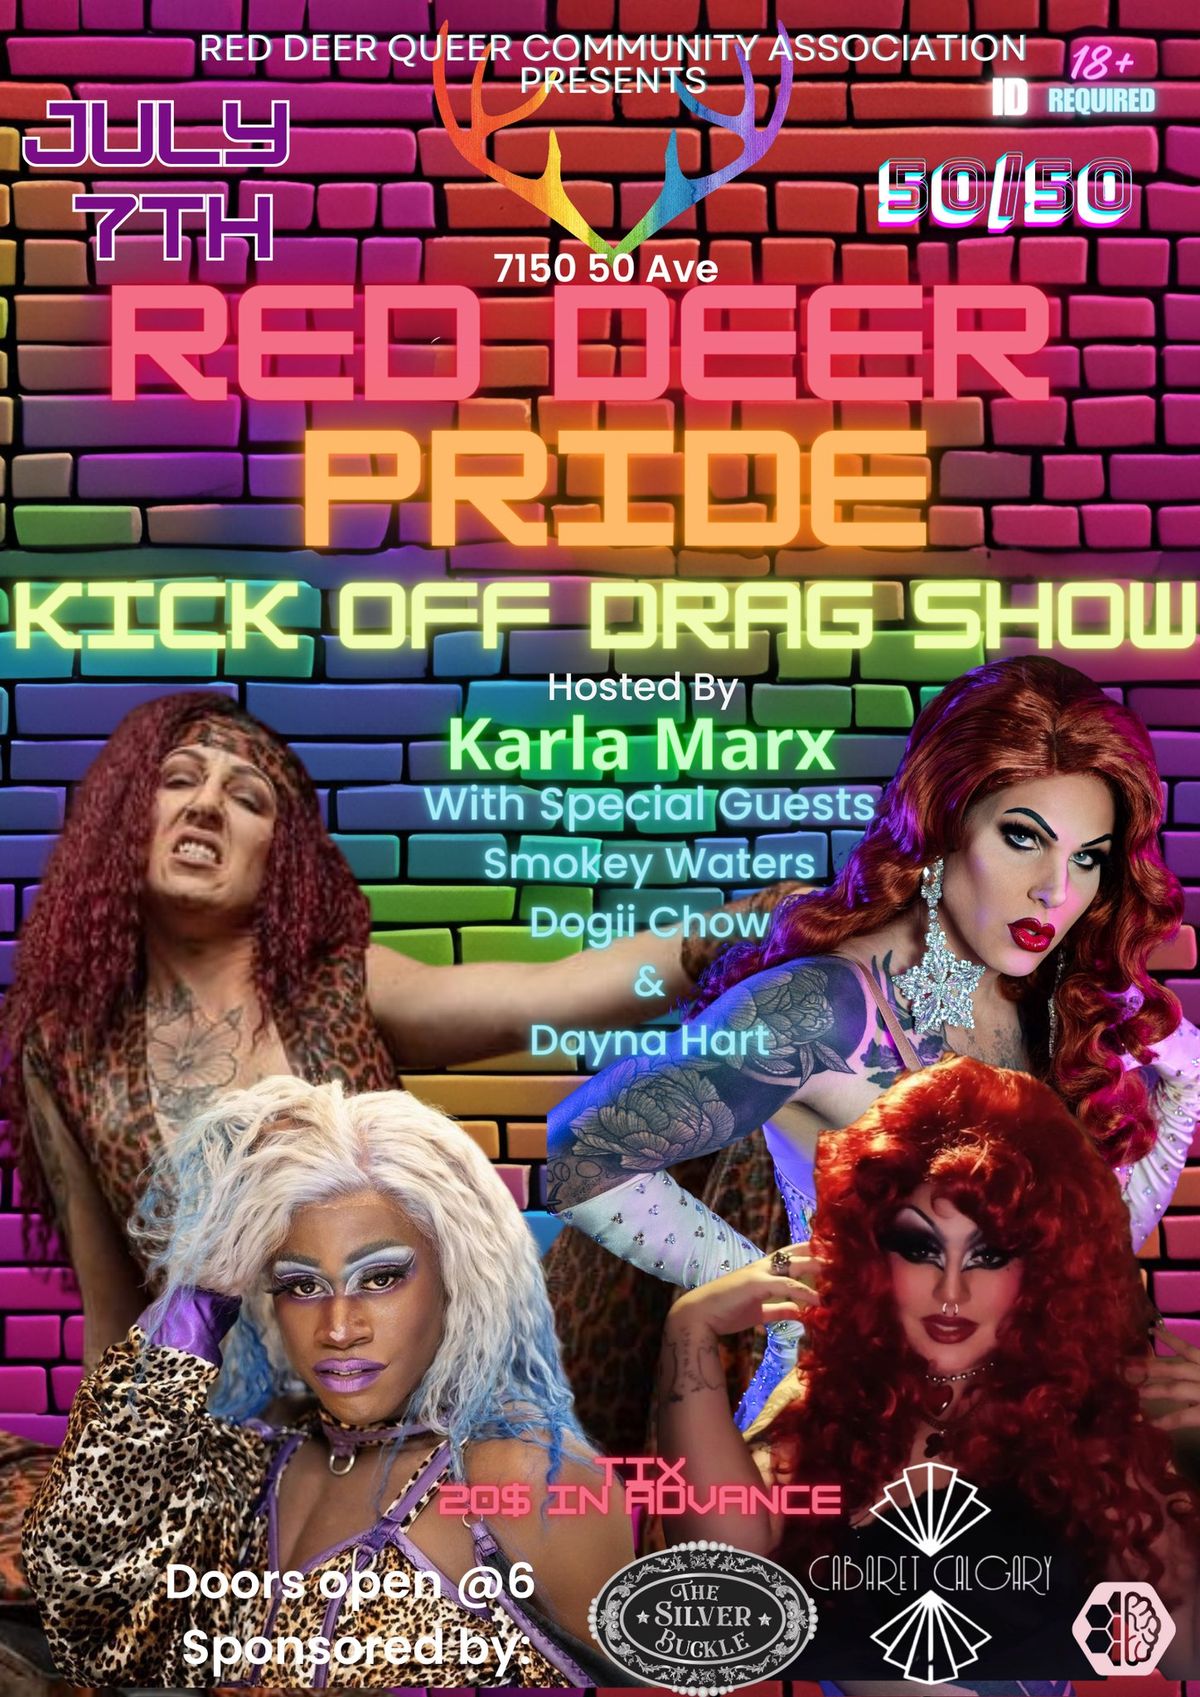 Red Deer PRIDE Kick off Drag Show